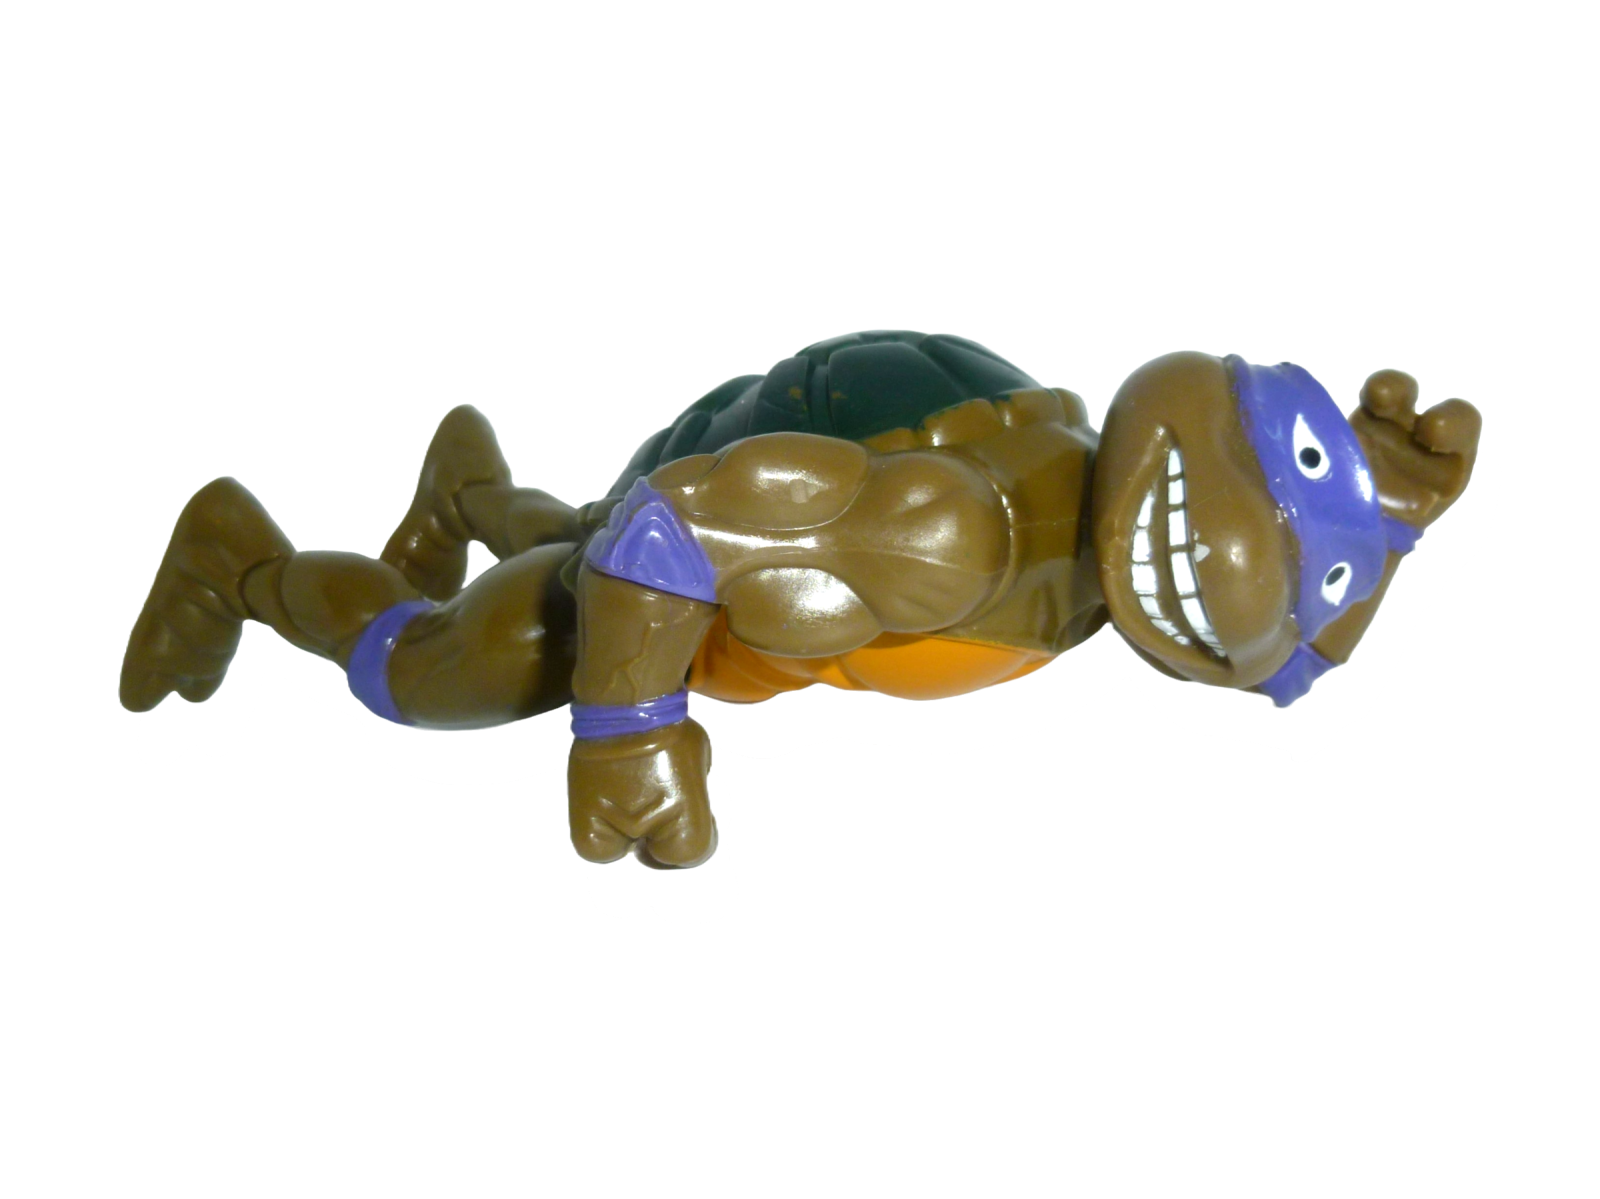 Sewer Swimmin Donatello - Wacky Action 1990 Mirage Studios / Playmates Toys 3